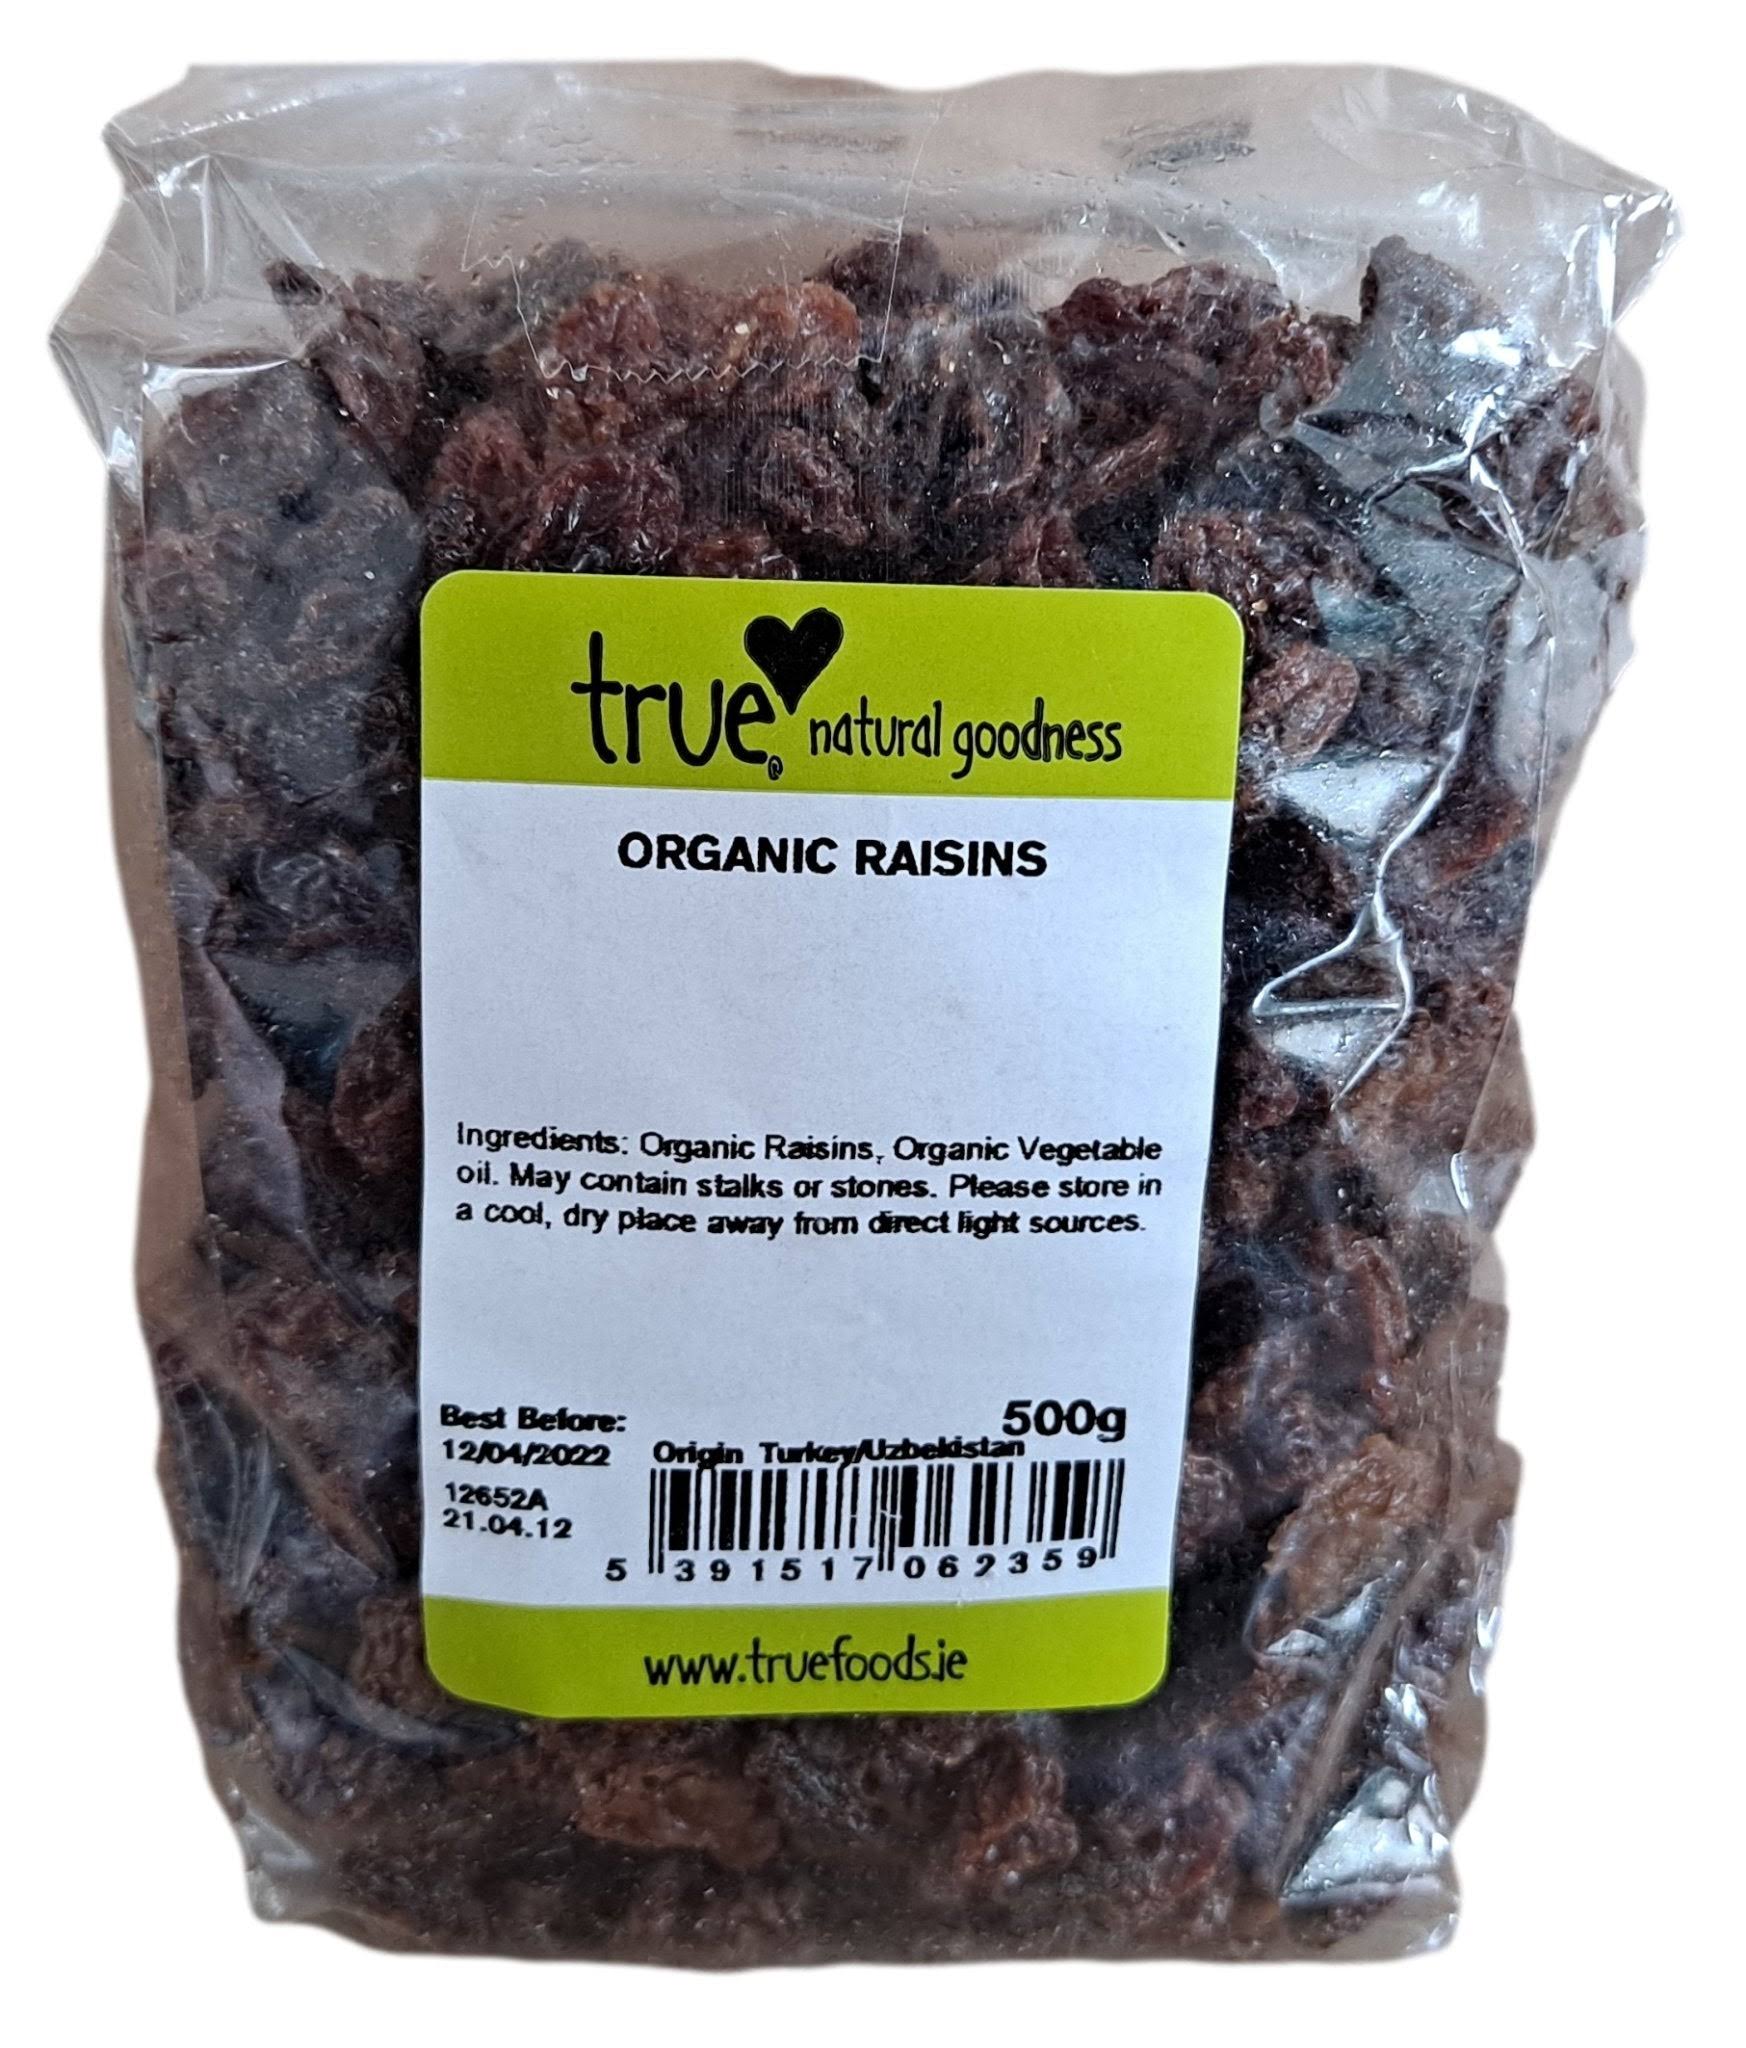 True Natural Goodness Organic Raisins 500g